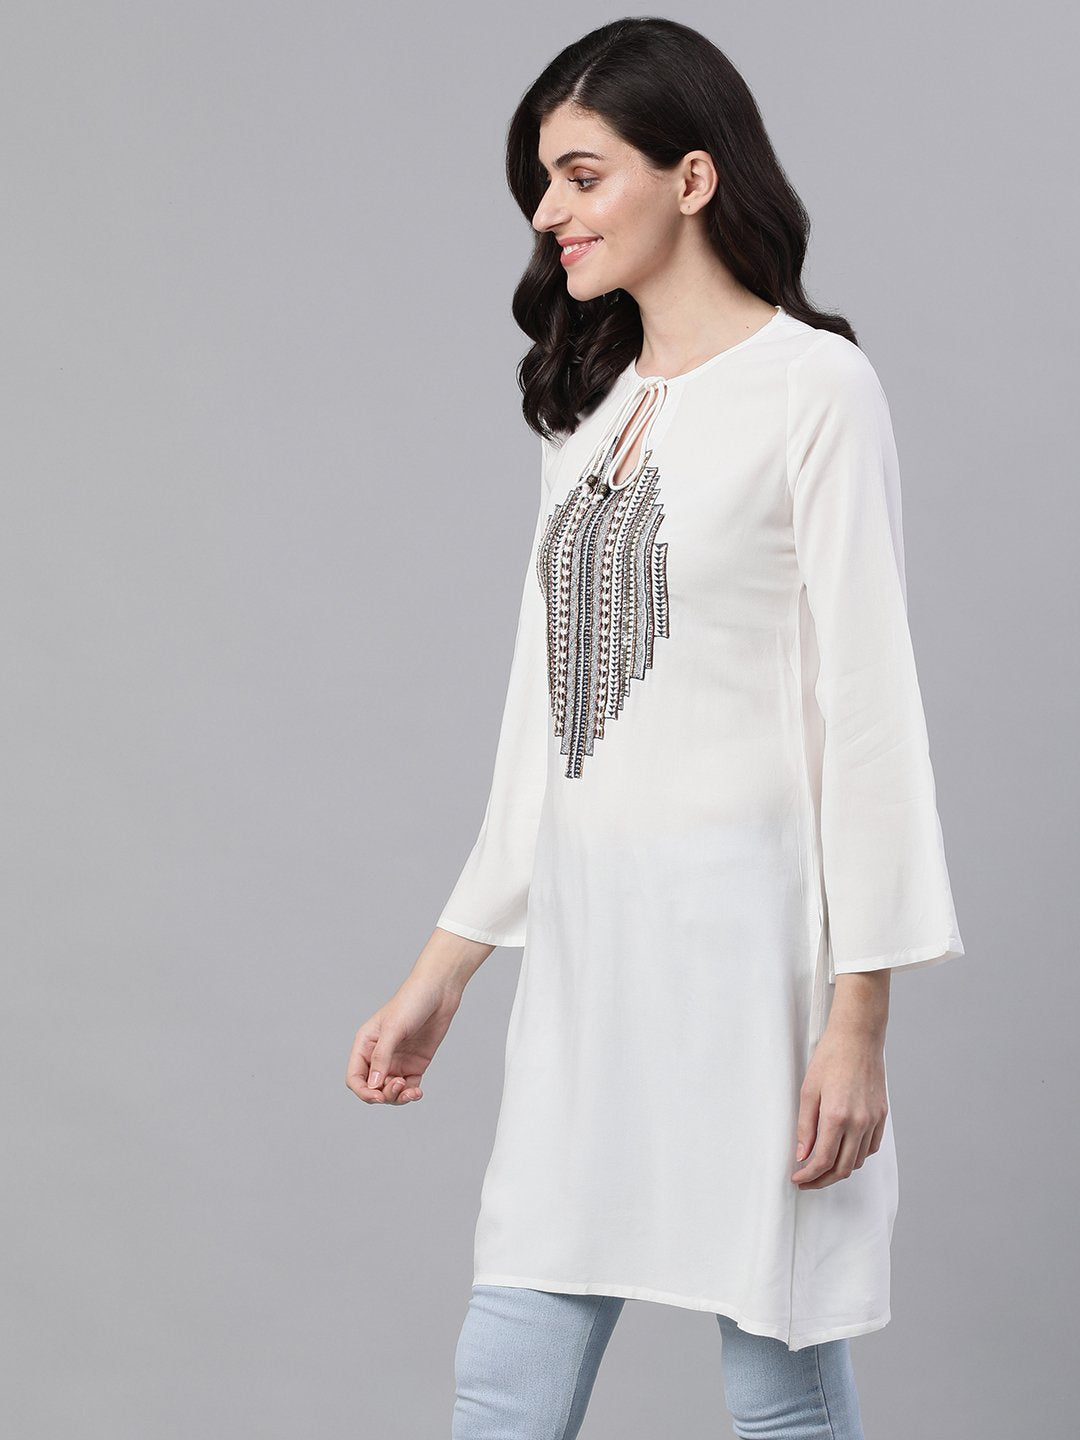 Ishin Women's Rayon Off White Embellished A-Line Dress